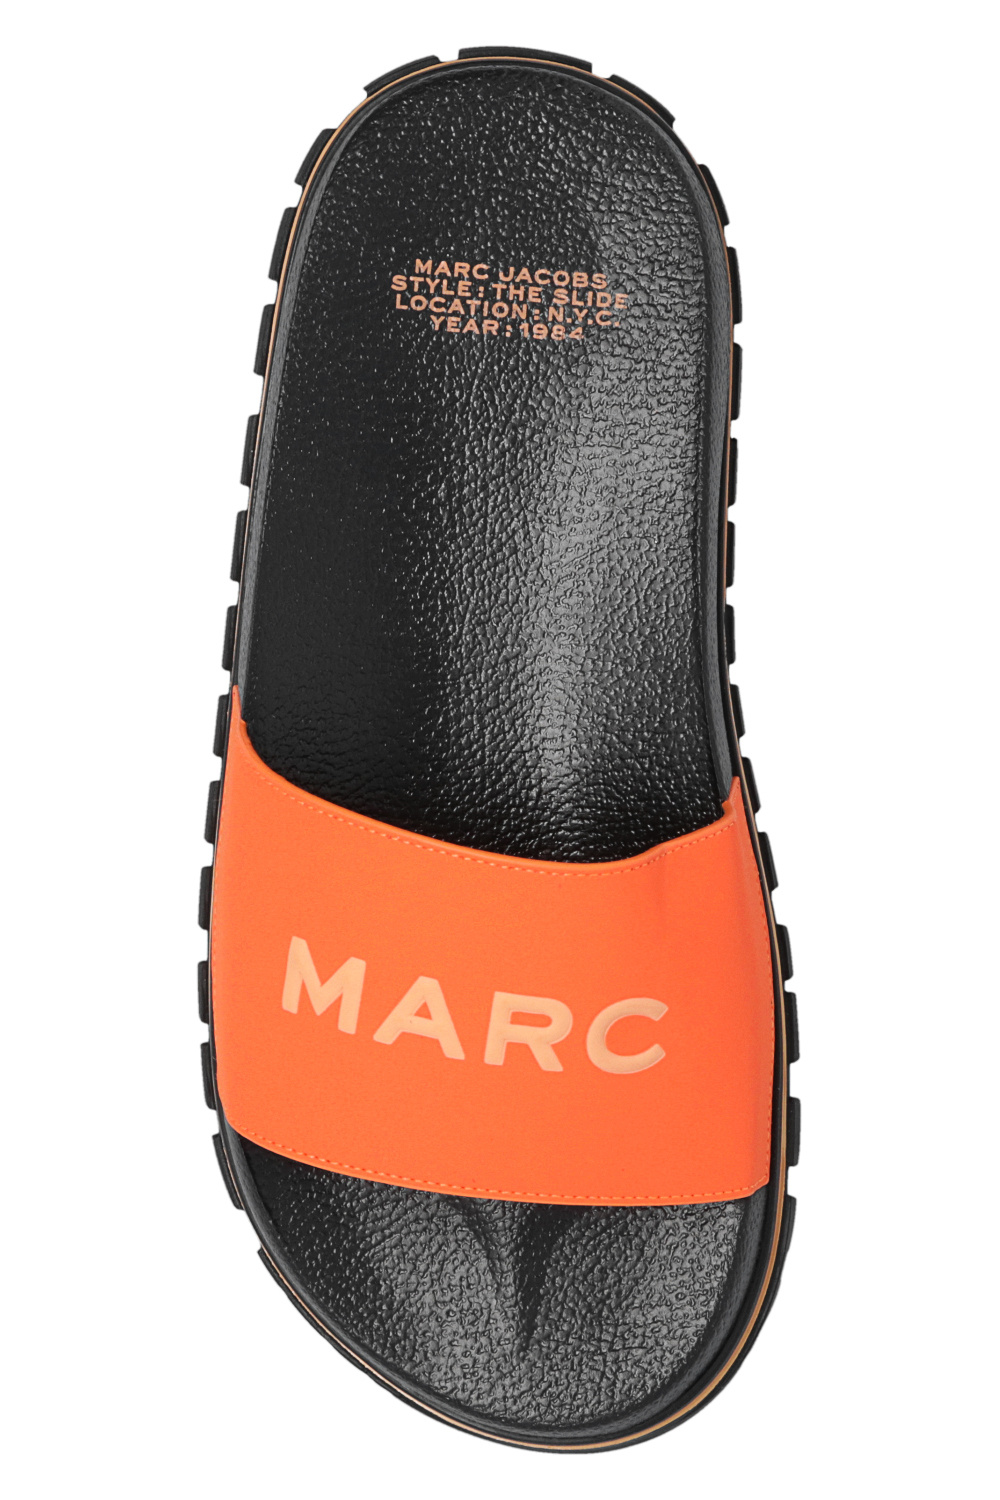 Marc Jacobs Marc Jacobs Green Snapshot Bag